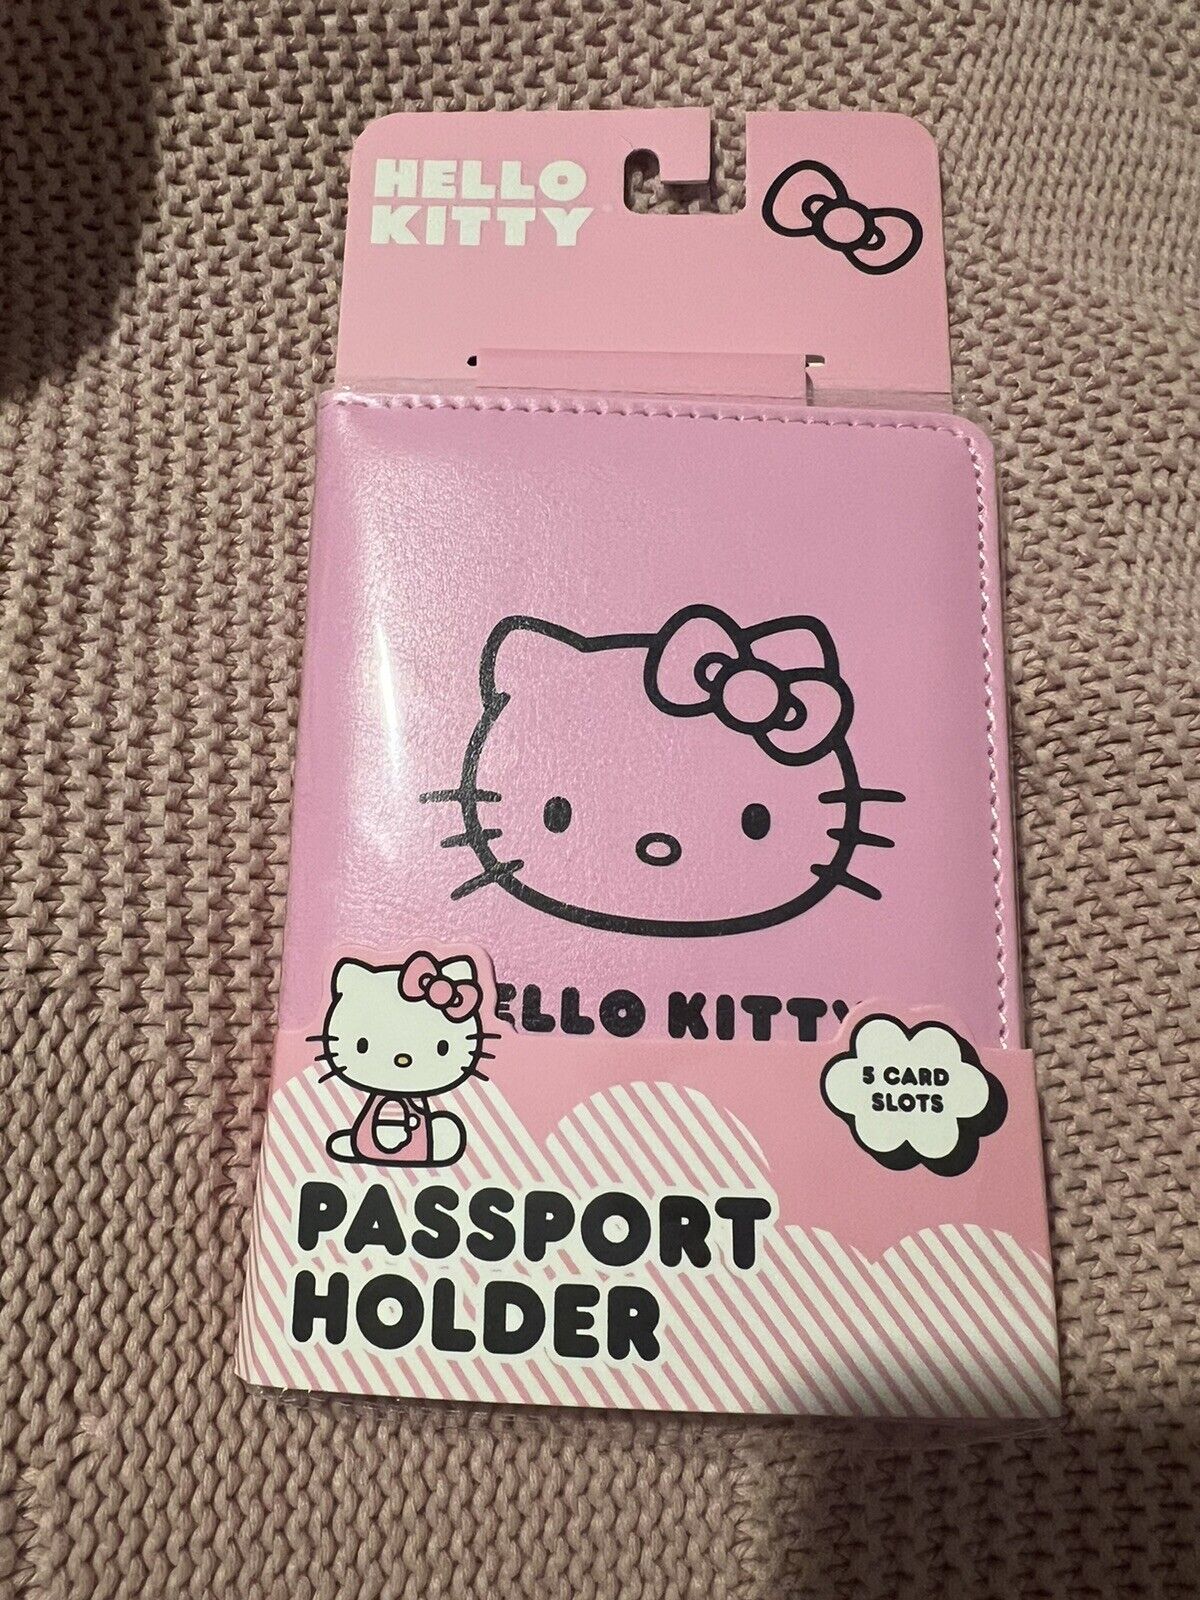 Sanrio Hello Kitty Passport Holder - Cute Travel Wallet for Hello Kitty Fans